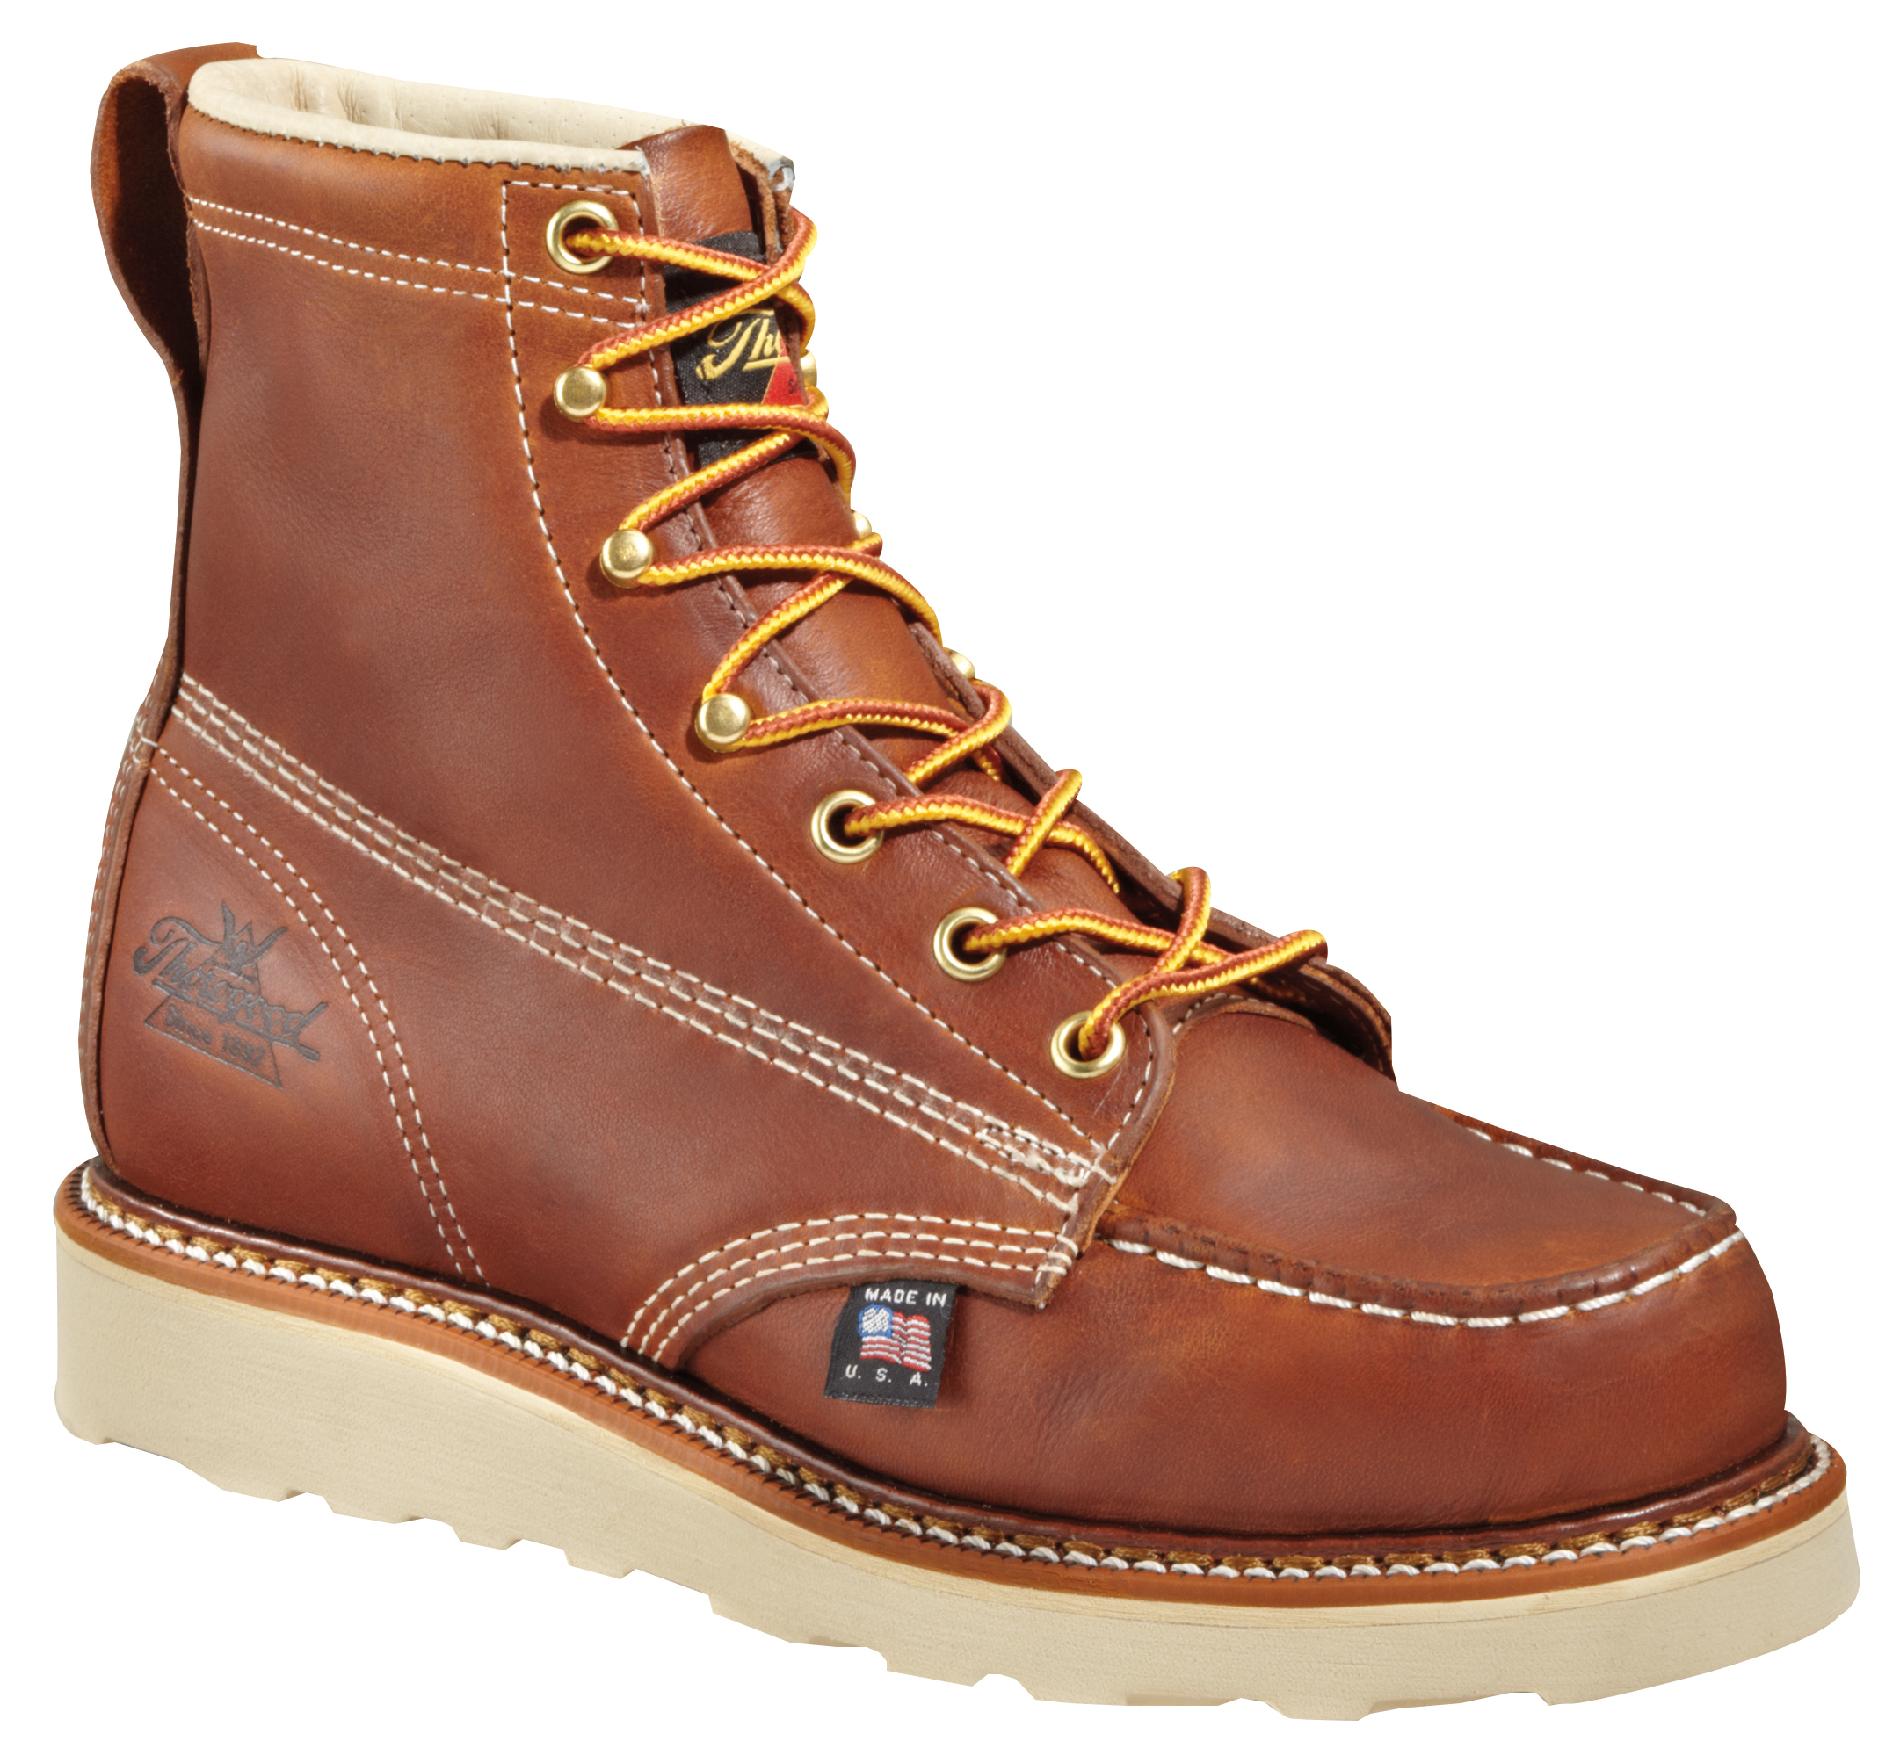 Thorogood Men's American Heritage 6" Steel Toe Work Boot 804-4200 Wide Width Available - Brown